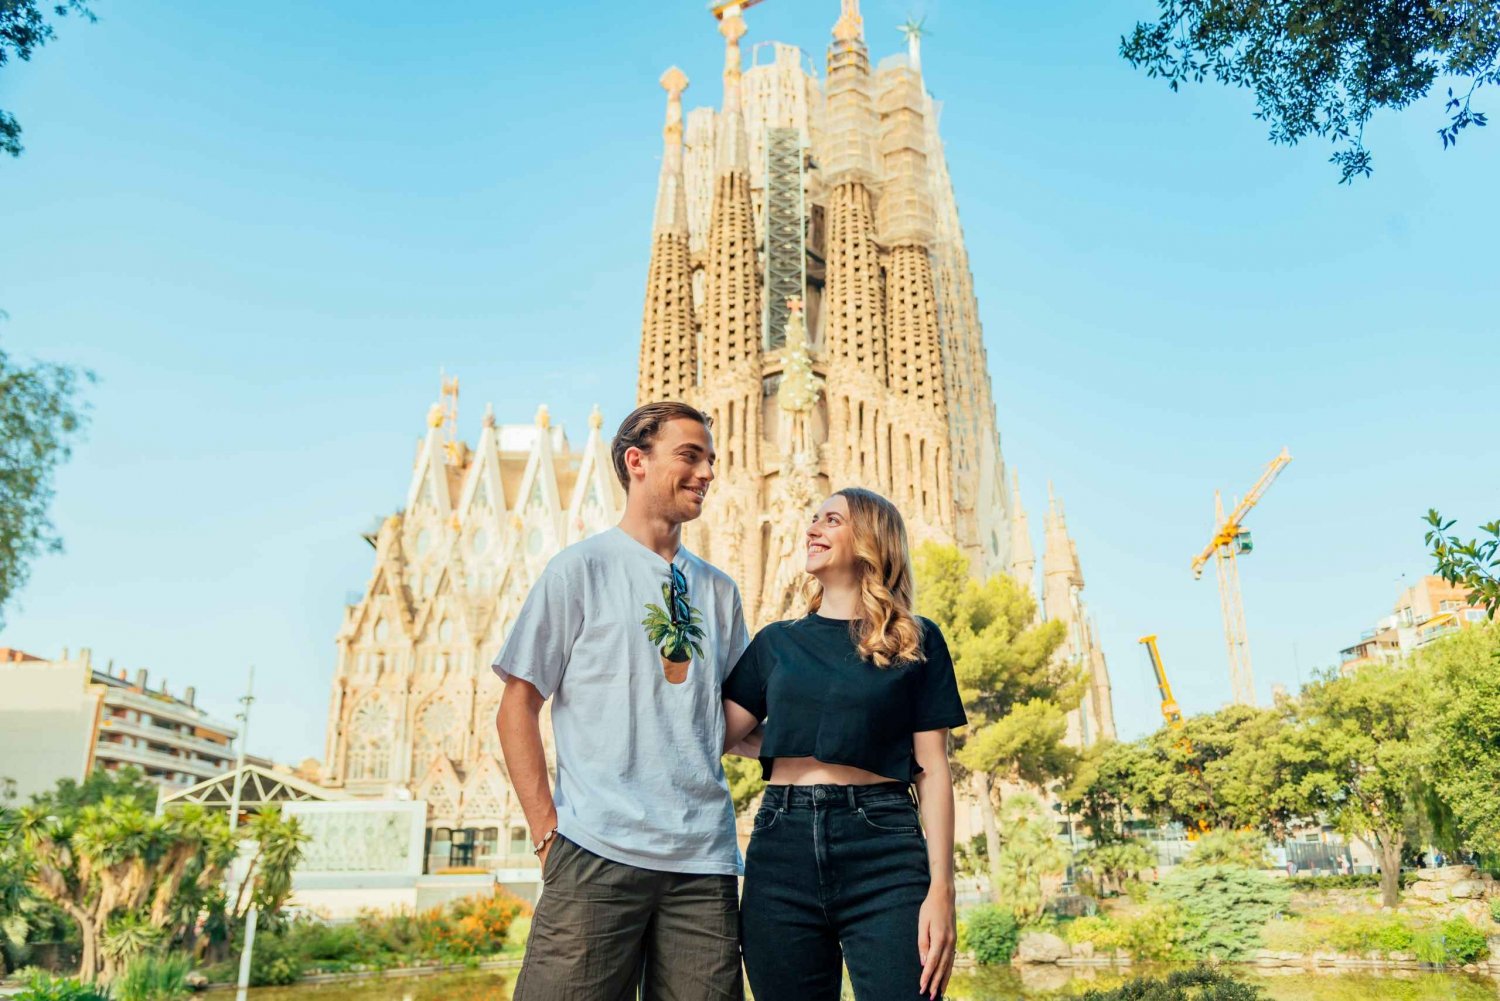 Barcelona: Din egen private fotografering ved Sagrada Familia